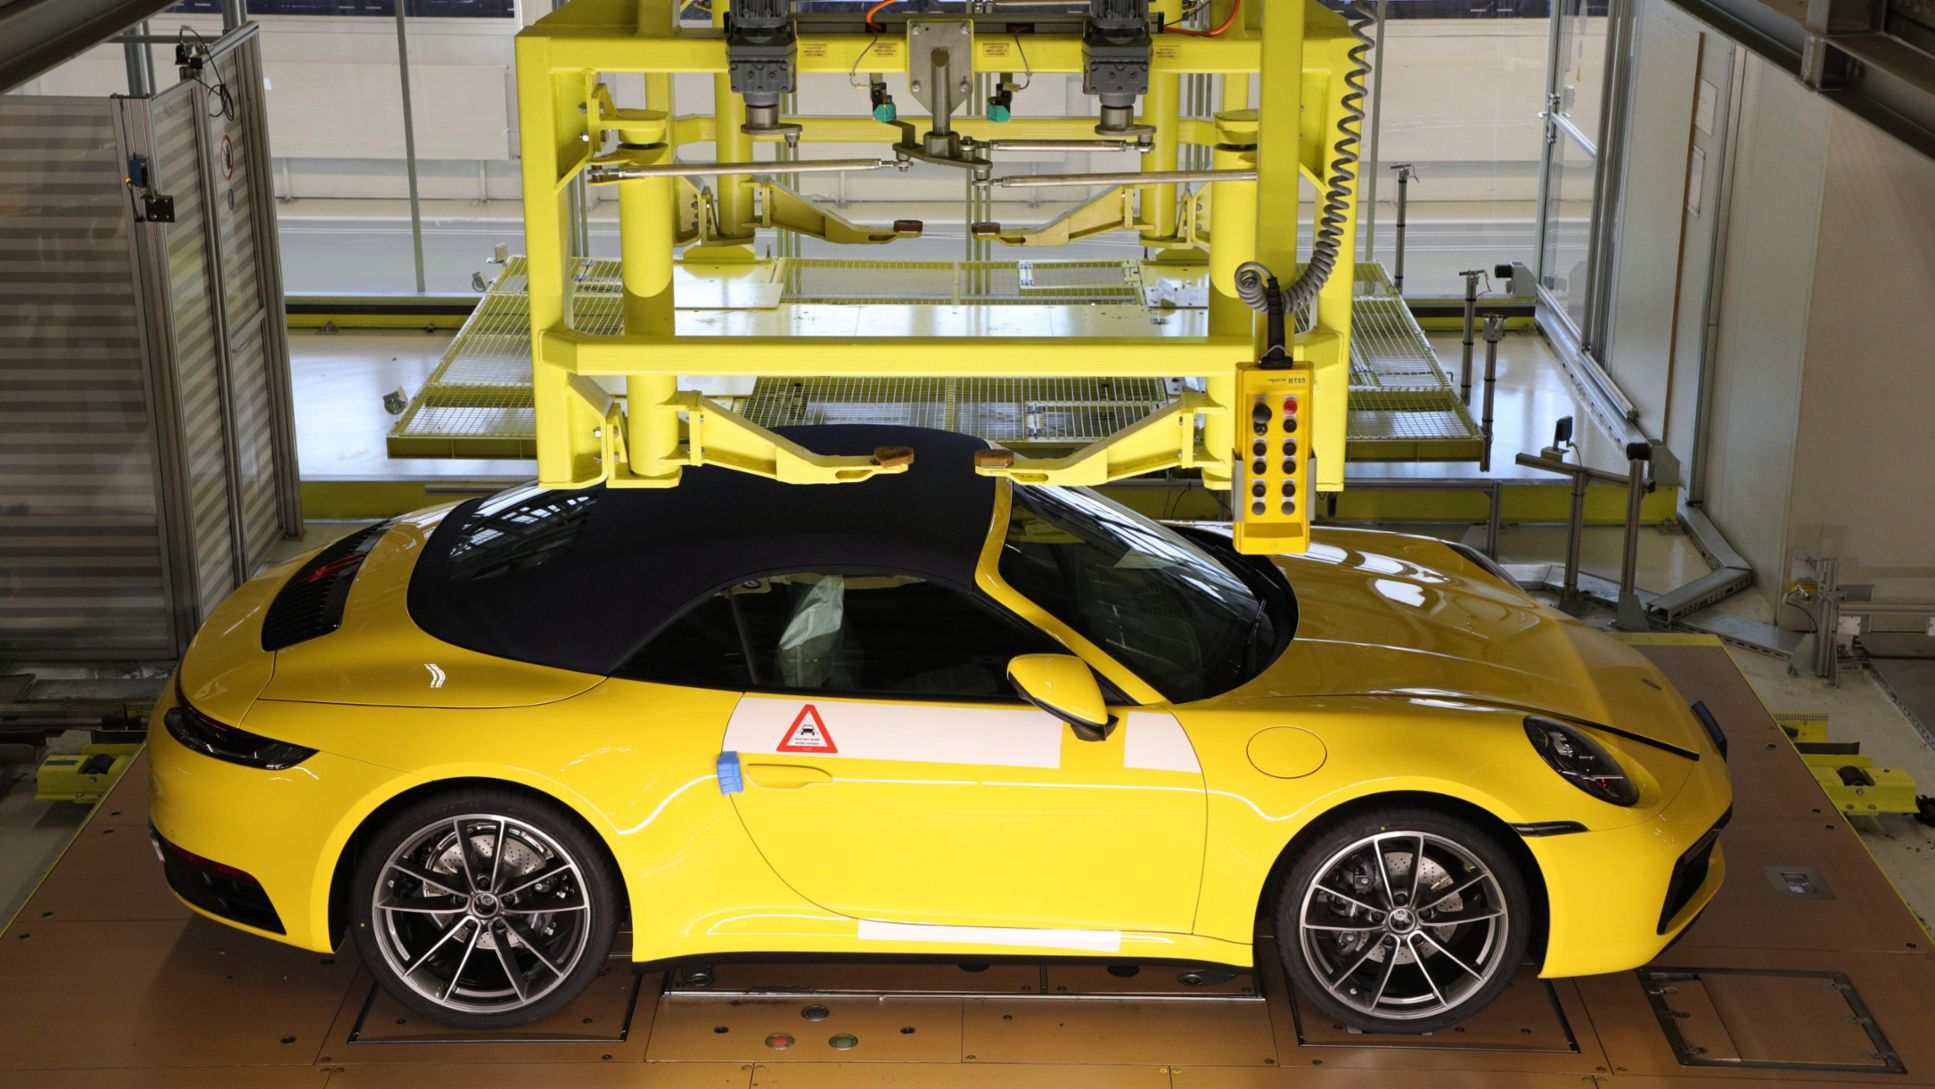 Production at Porsche, 2020, Porsche AG